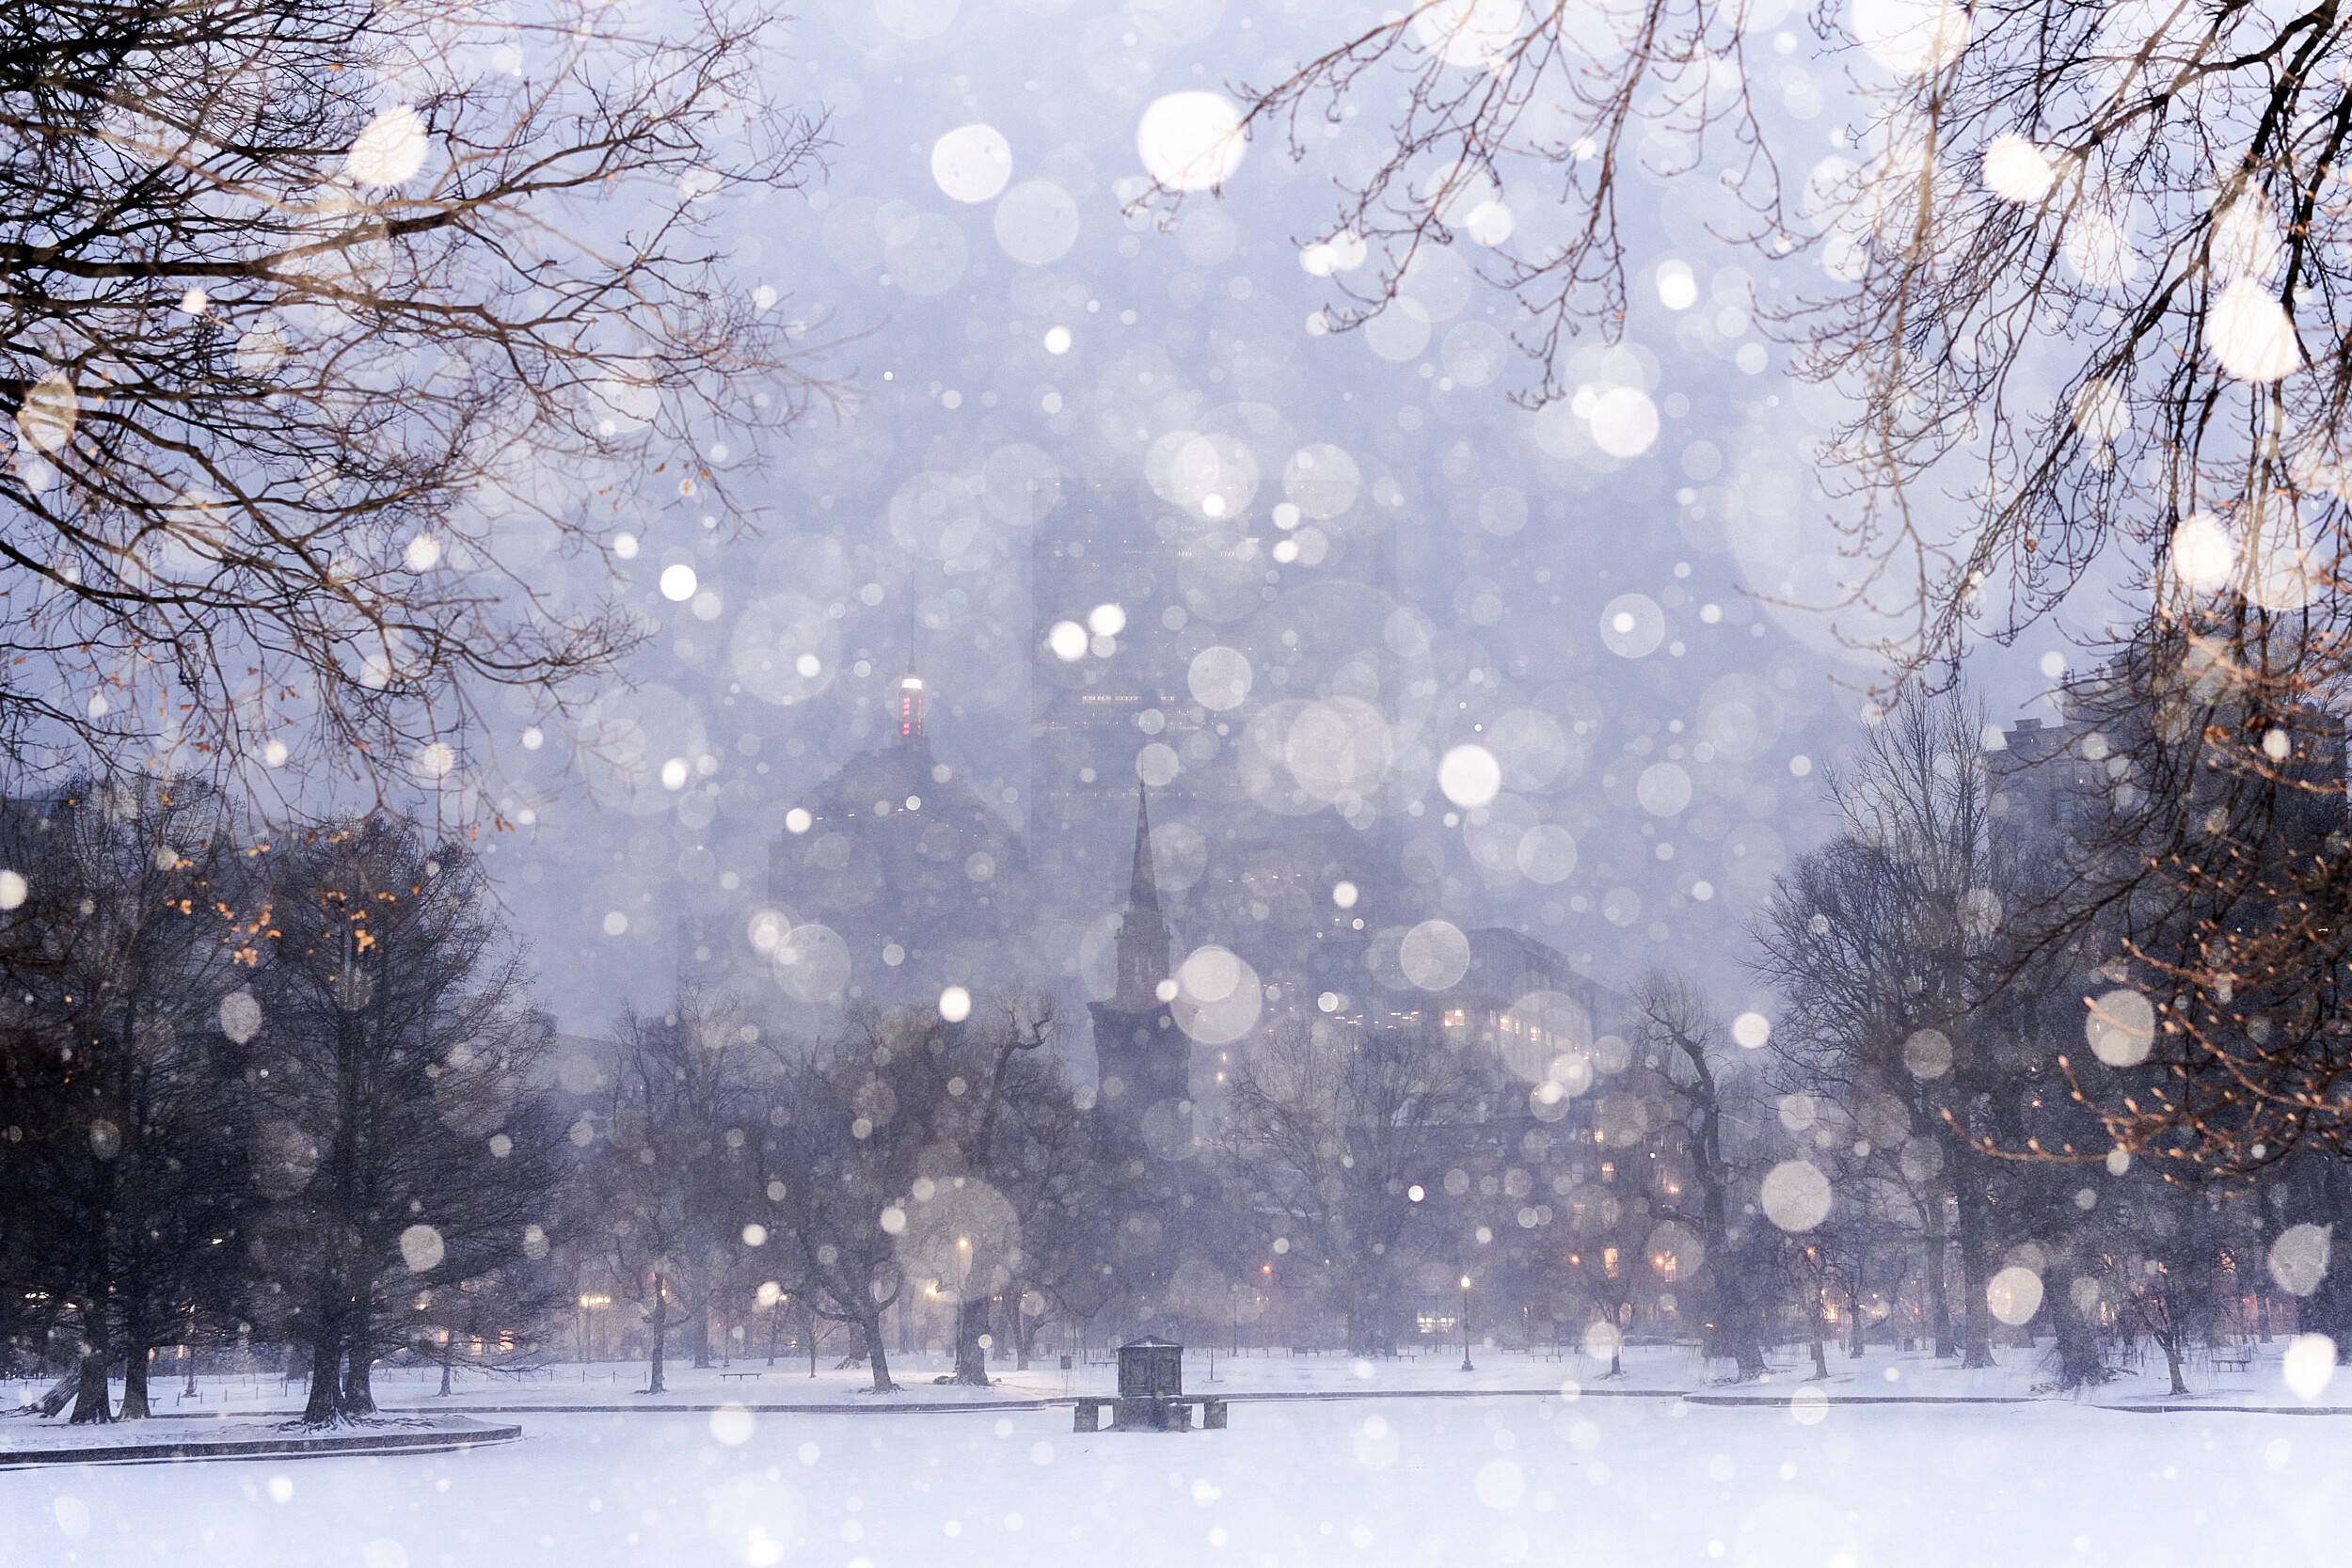 Early morning snow in Boston Common (public garden)